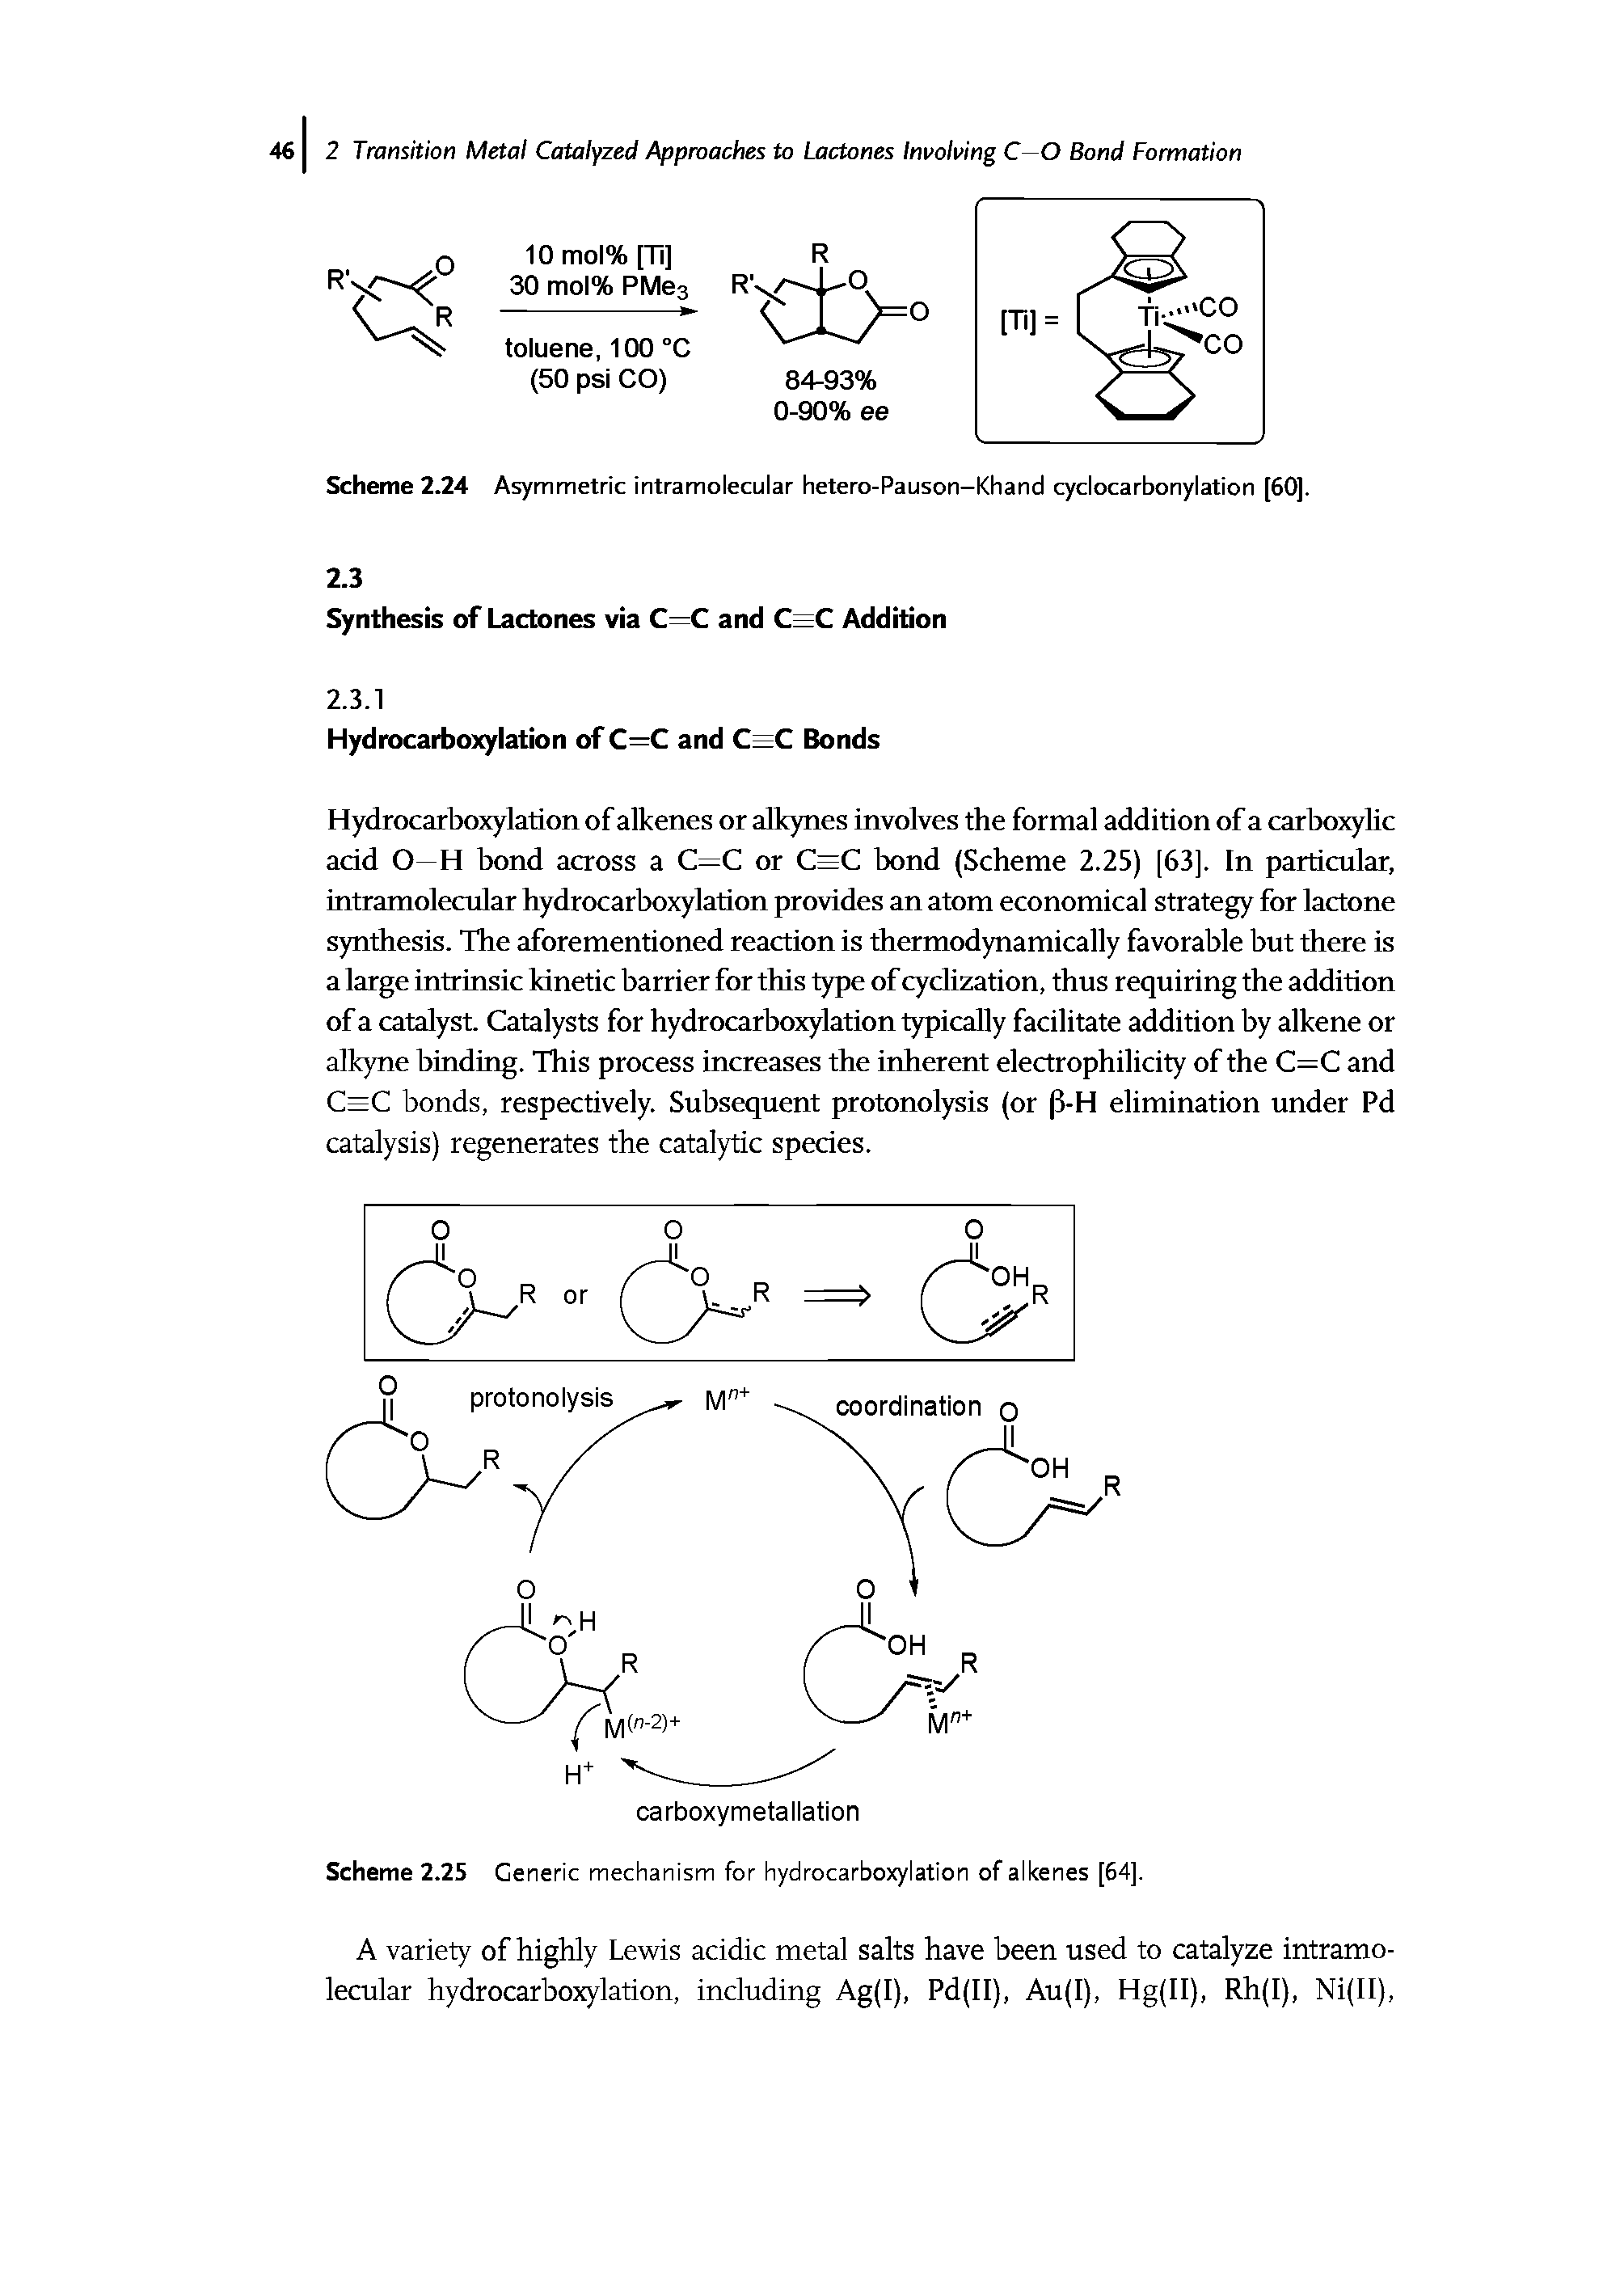 Scheme 2.24 Asymmetric intramolecular hetero-Pauson-Khand cyclocarbonylation [60].